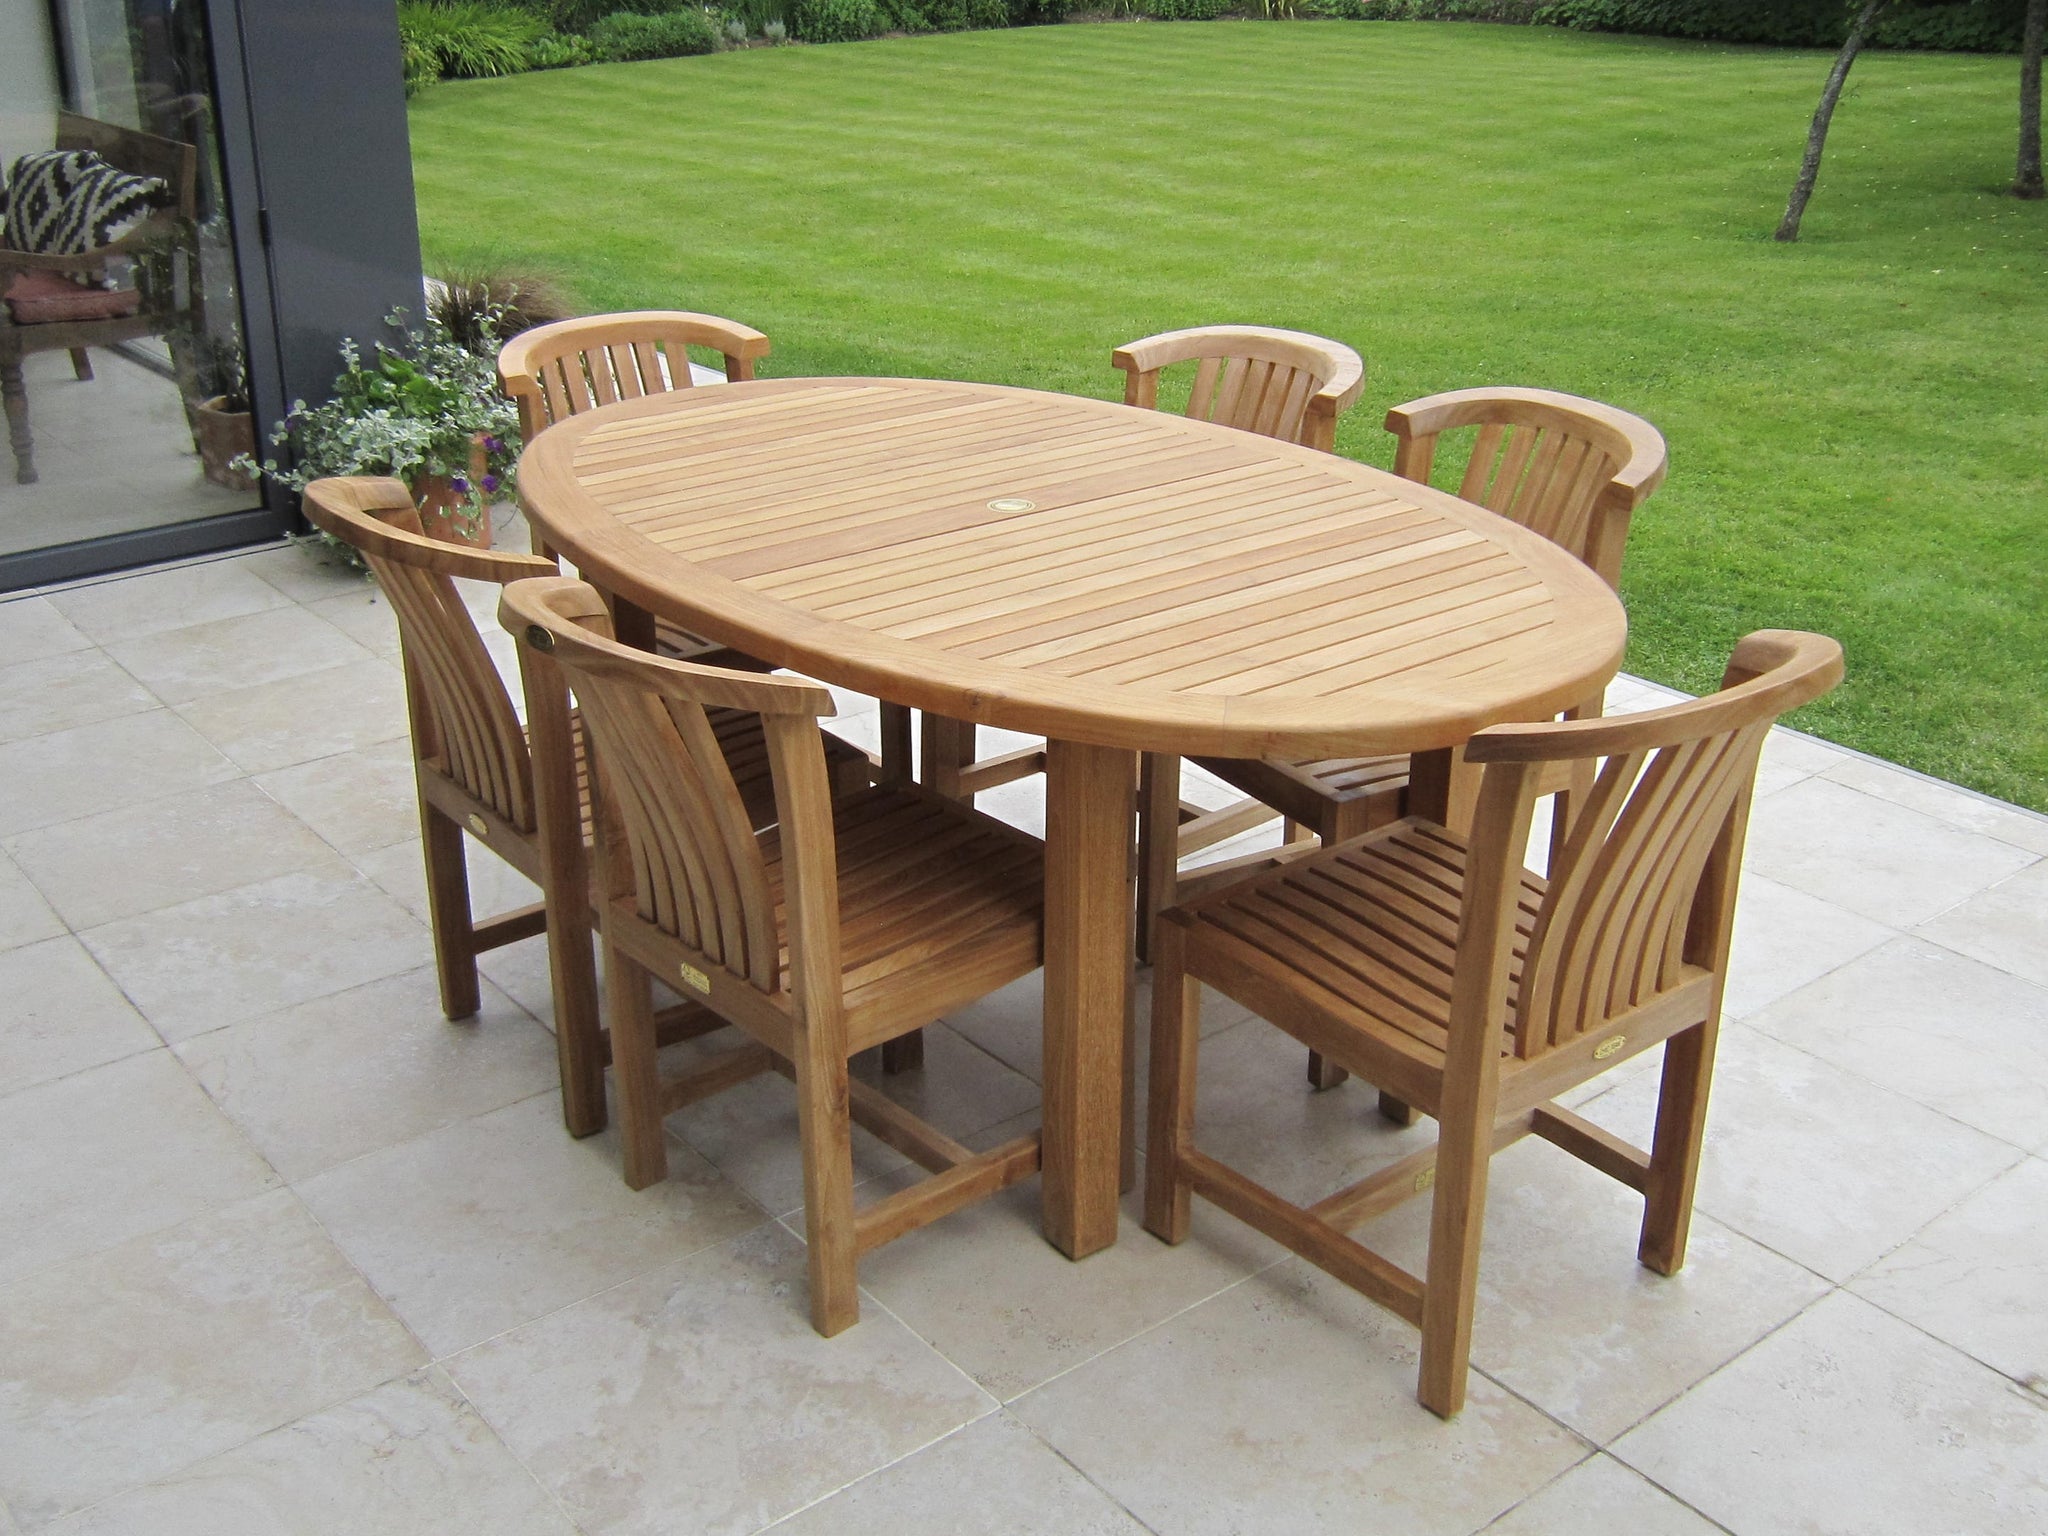 Oval Teak Outdoor Dining Table Set at Vincent Ross blog